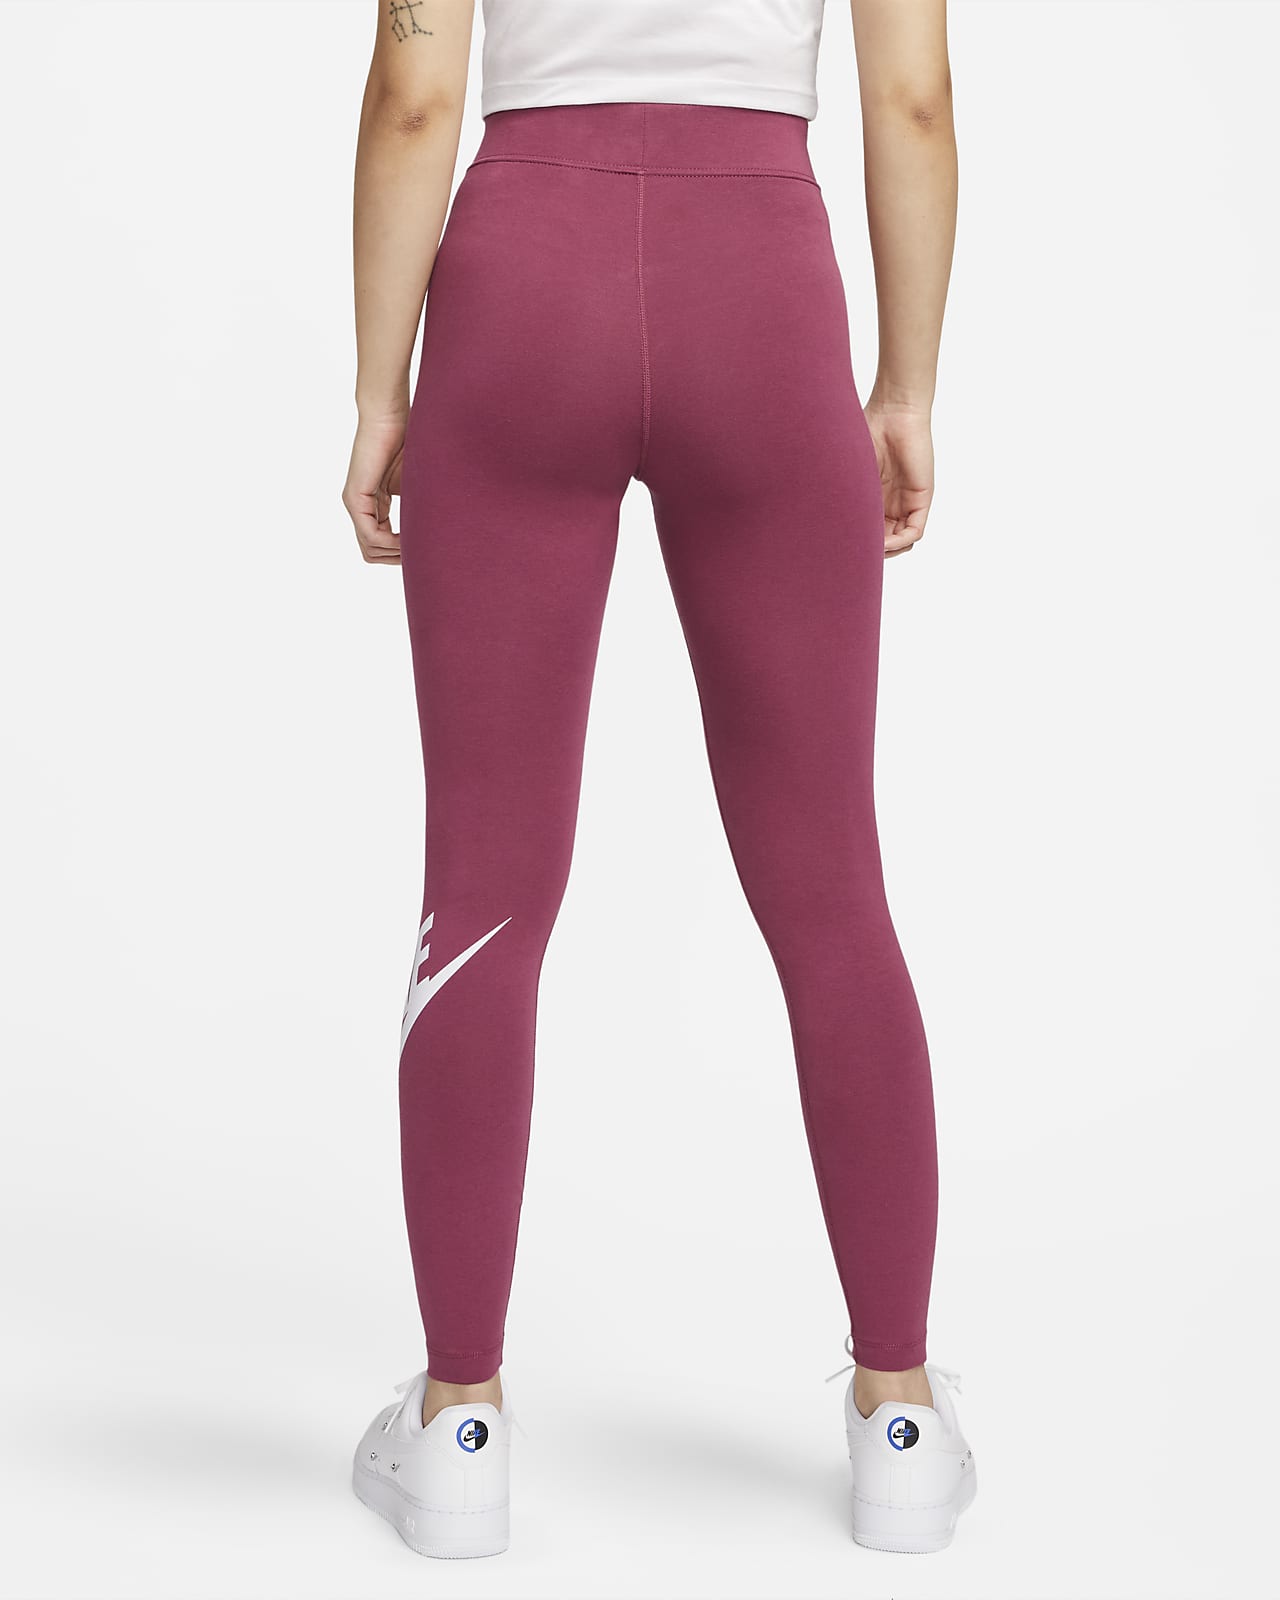 Nike Nike Women's Fashion New Sports Pants Fitness Training Yoga Tight  Pants CZ8529-010